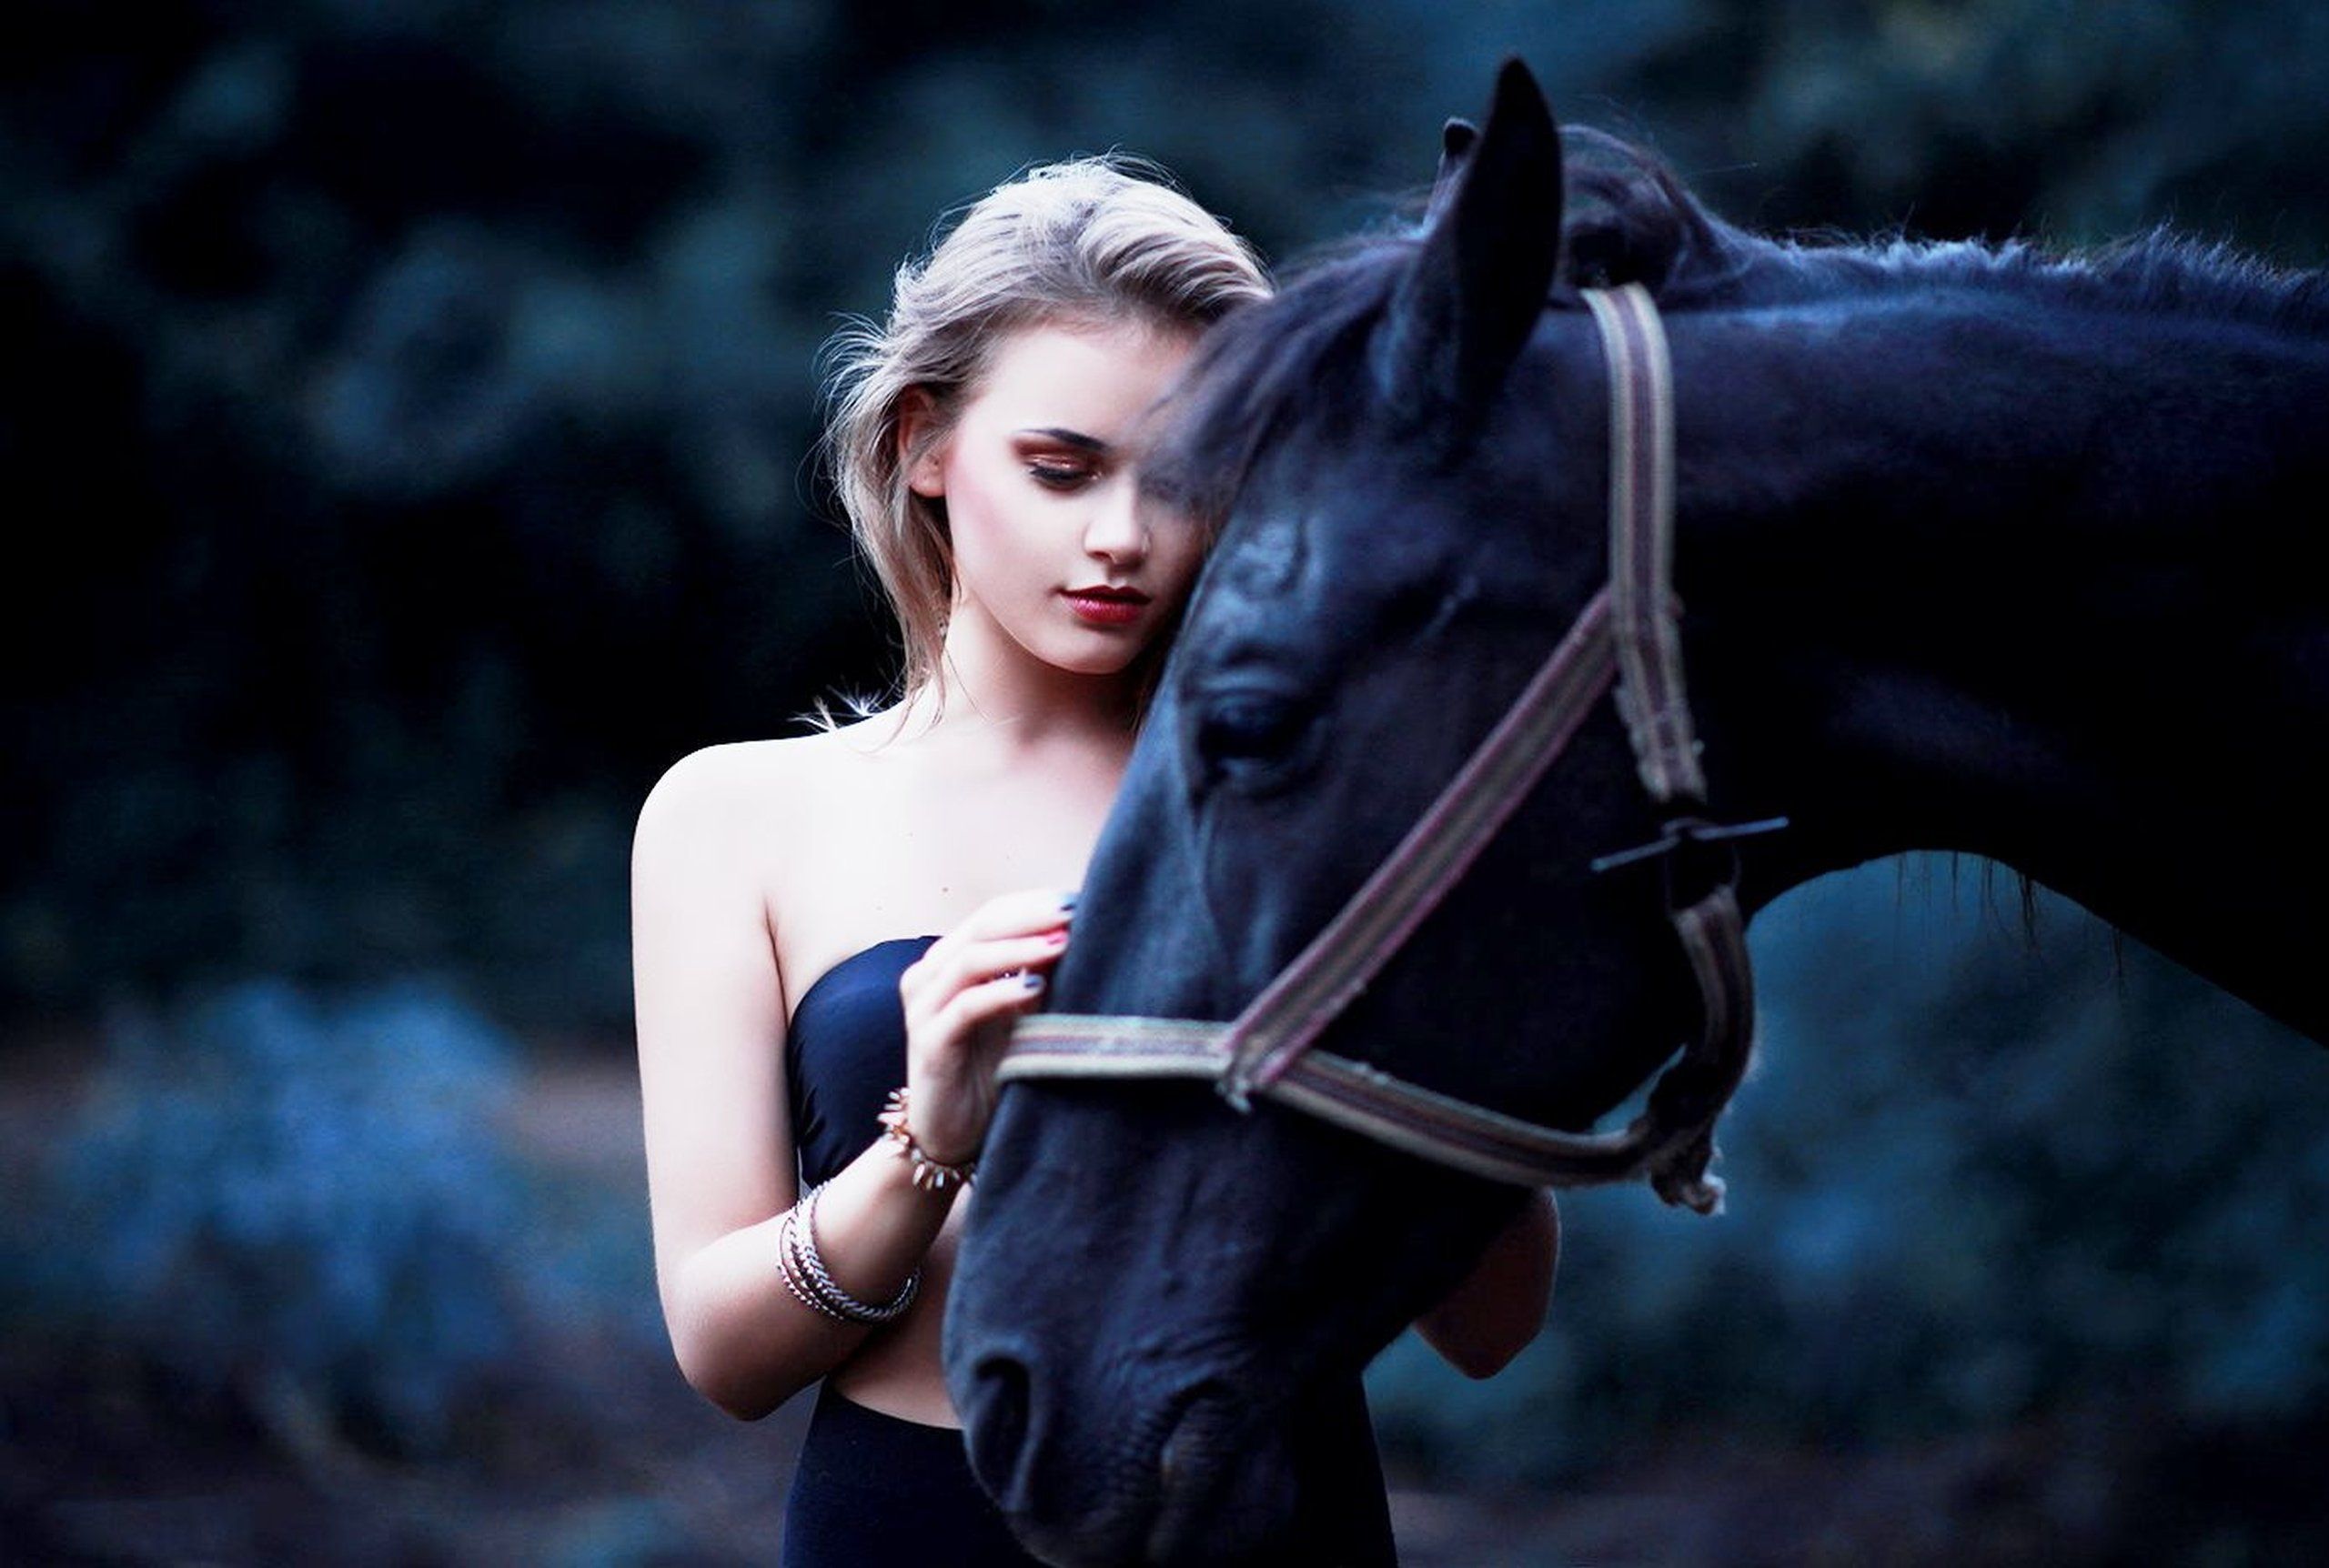 Beautiful Girl Black Horse Outdoor. Horses, Horse mate, Horse